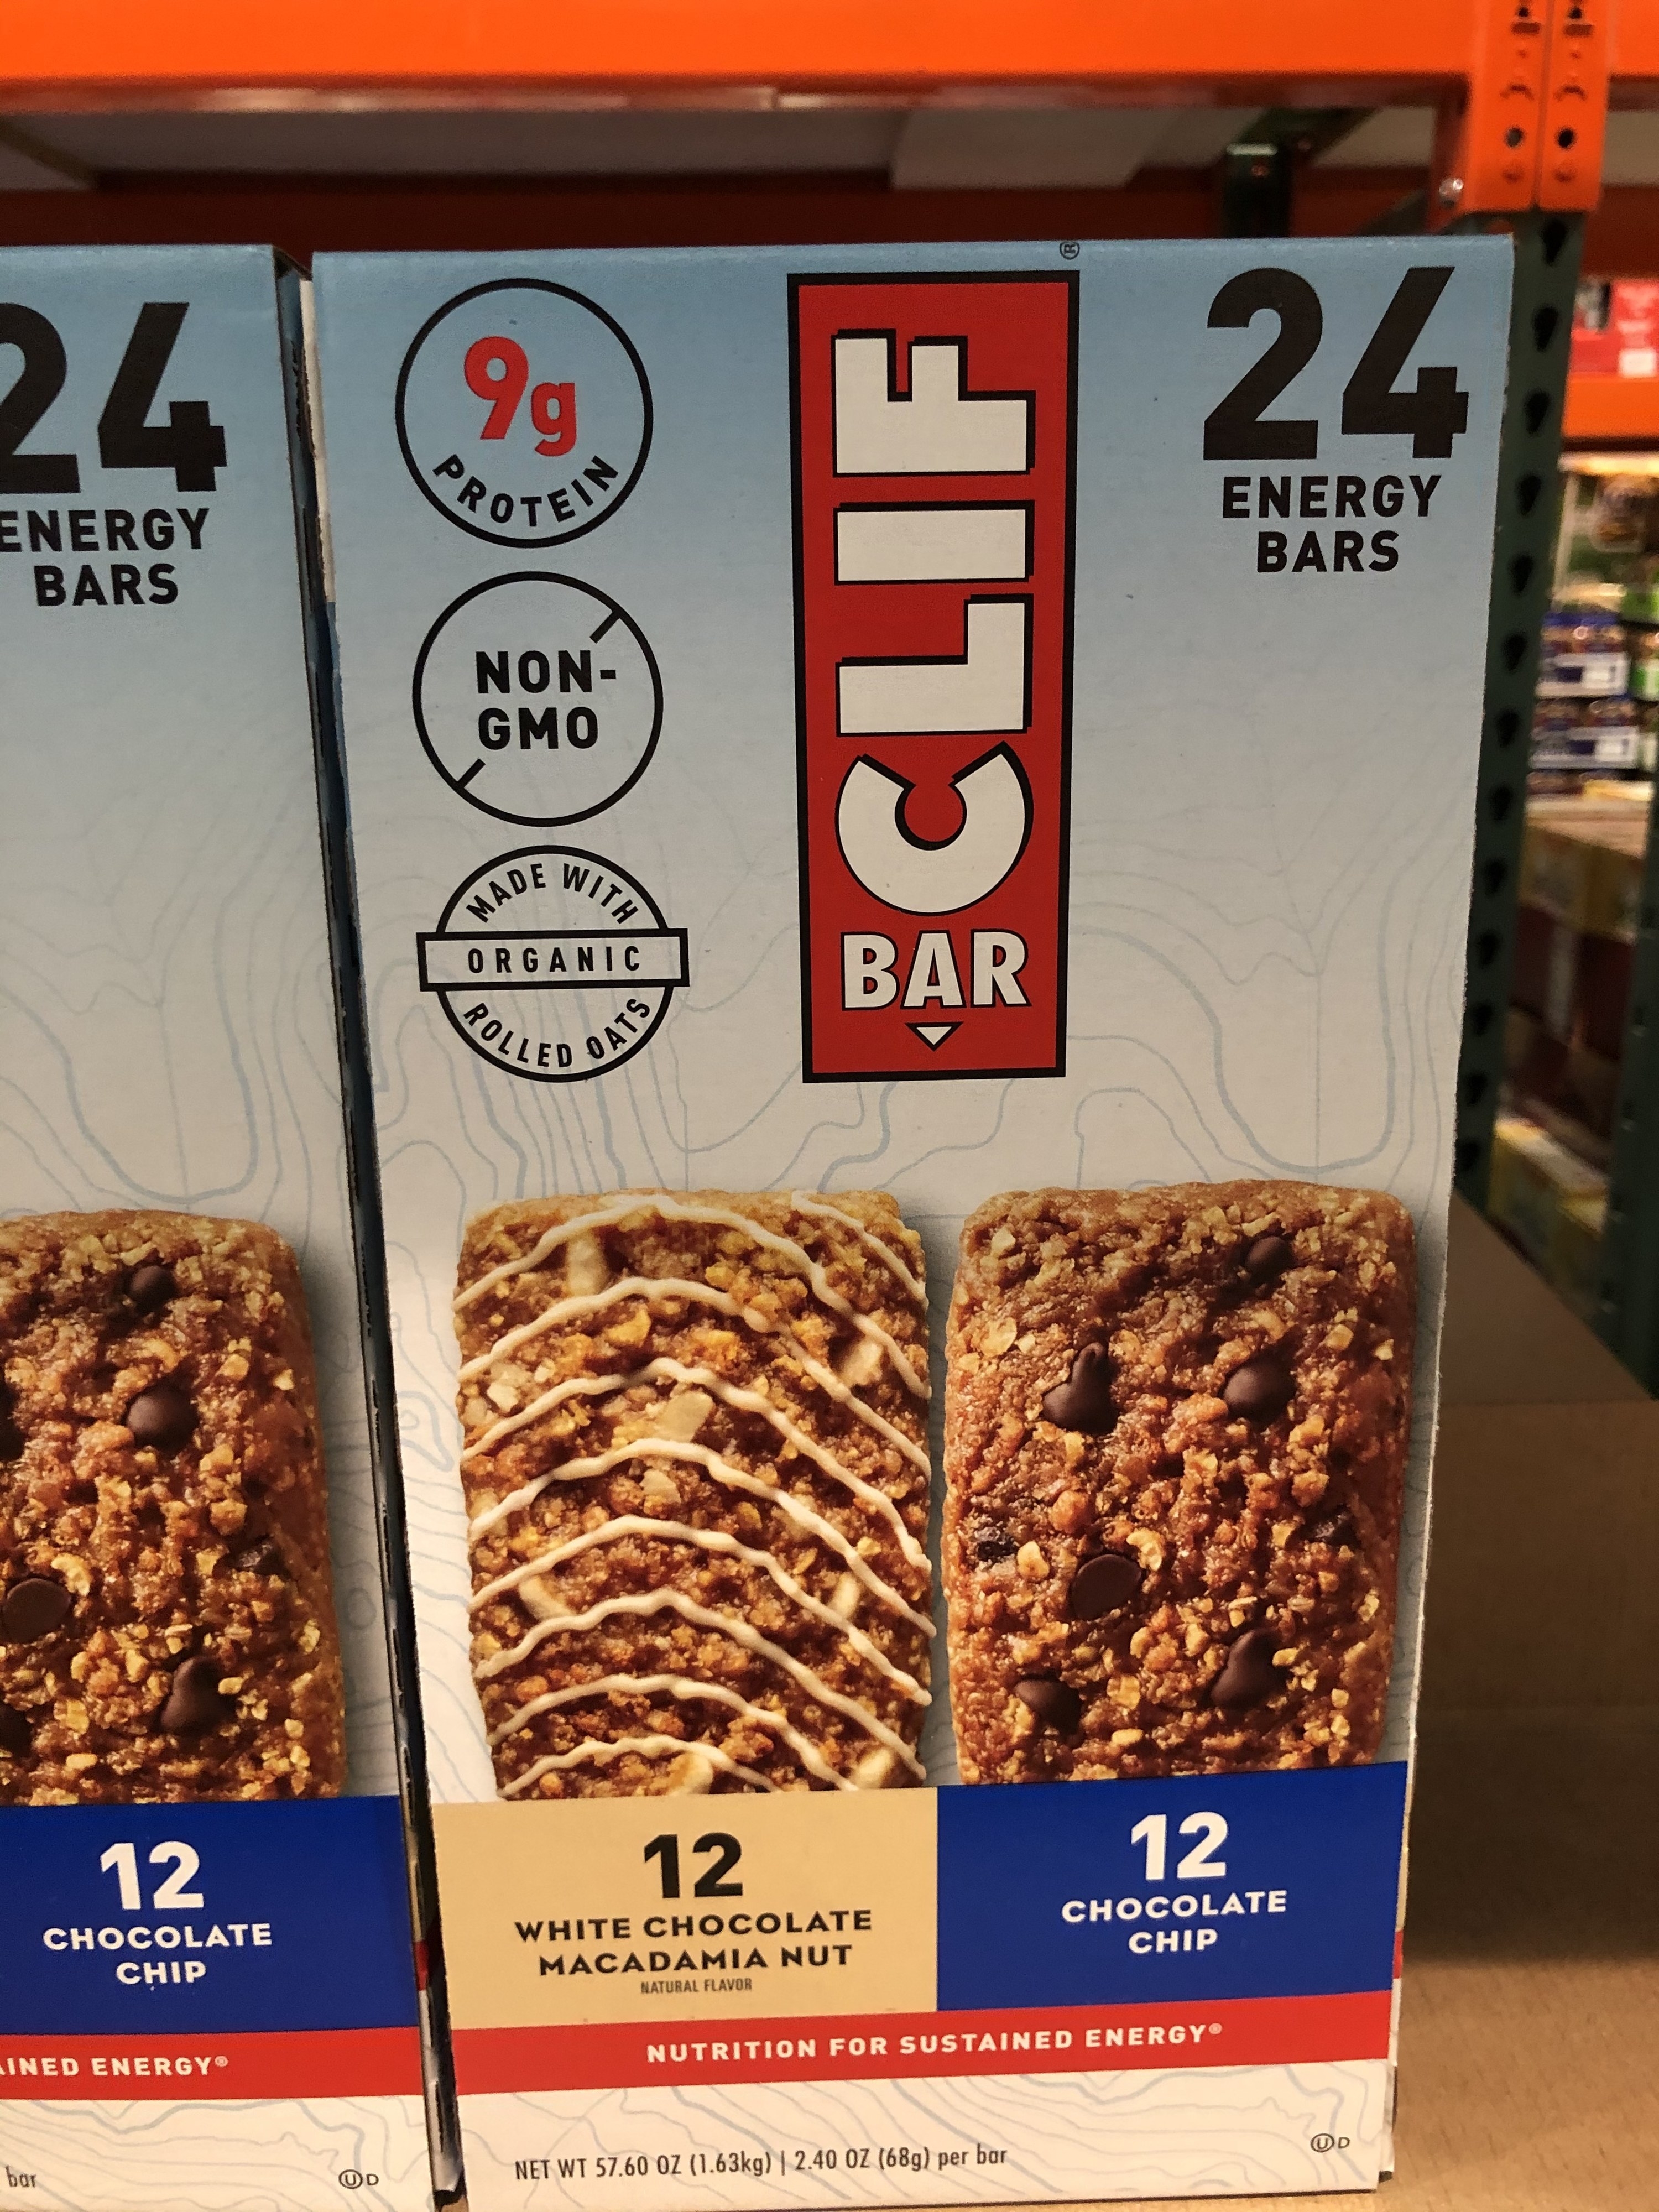 A box of Clif Bars